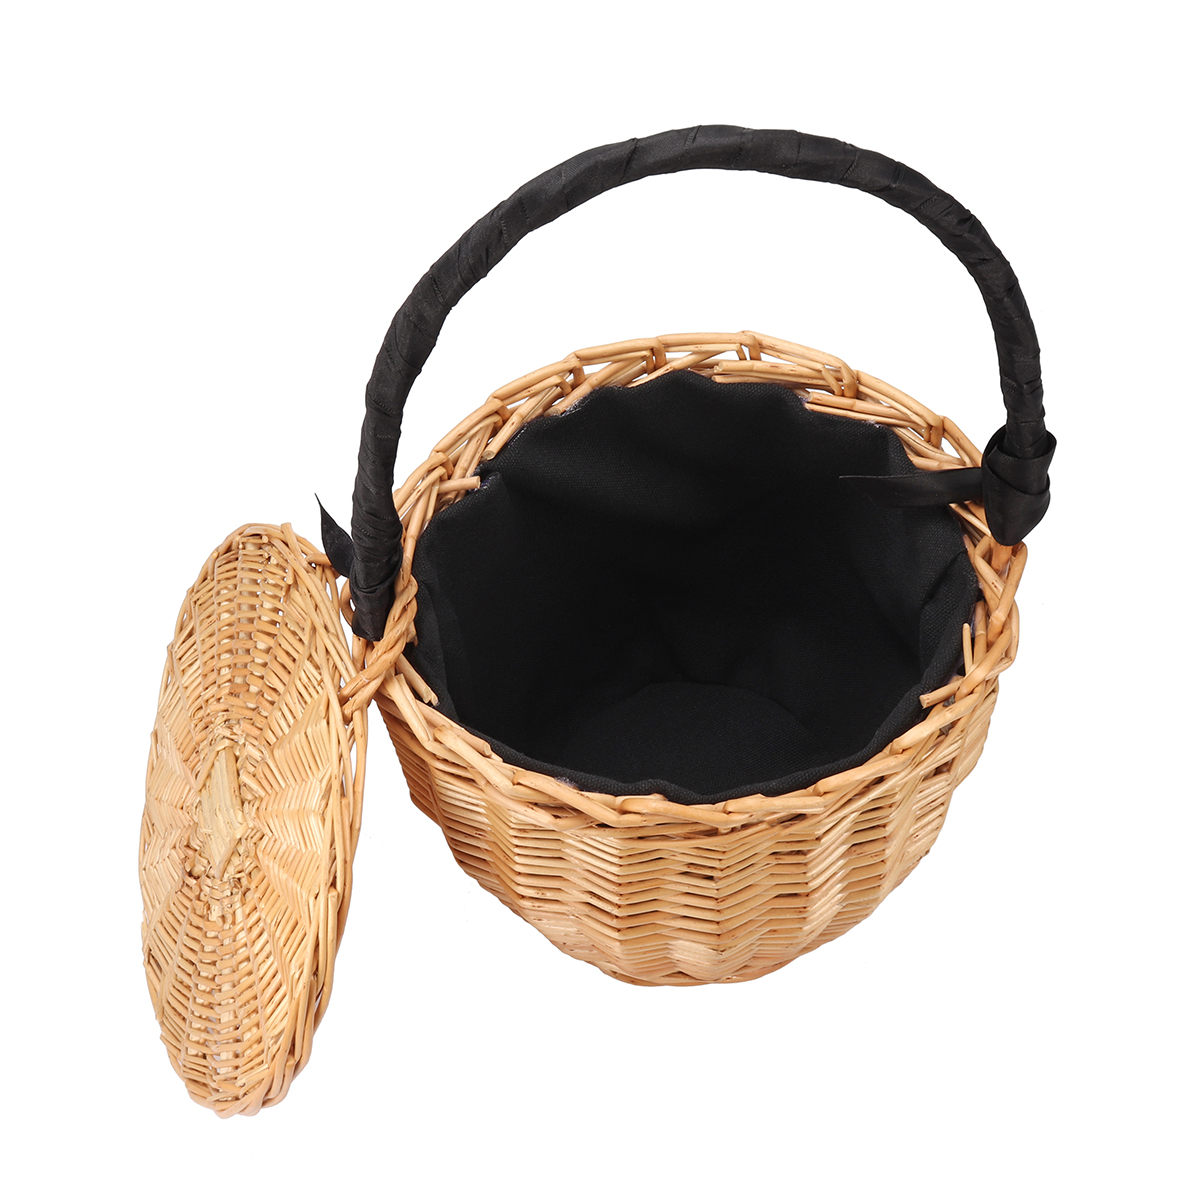 100-Handmade-Straw-Woven-Tote-Wicker-Bag-With-Lid-Bamboo-Basket-Handbag-1296764